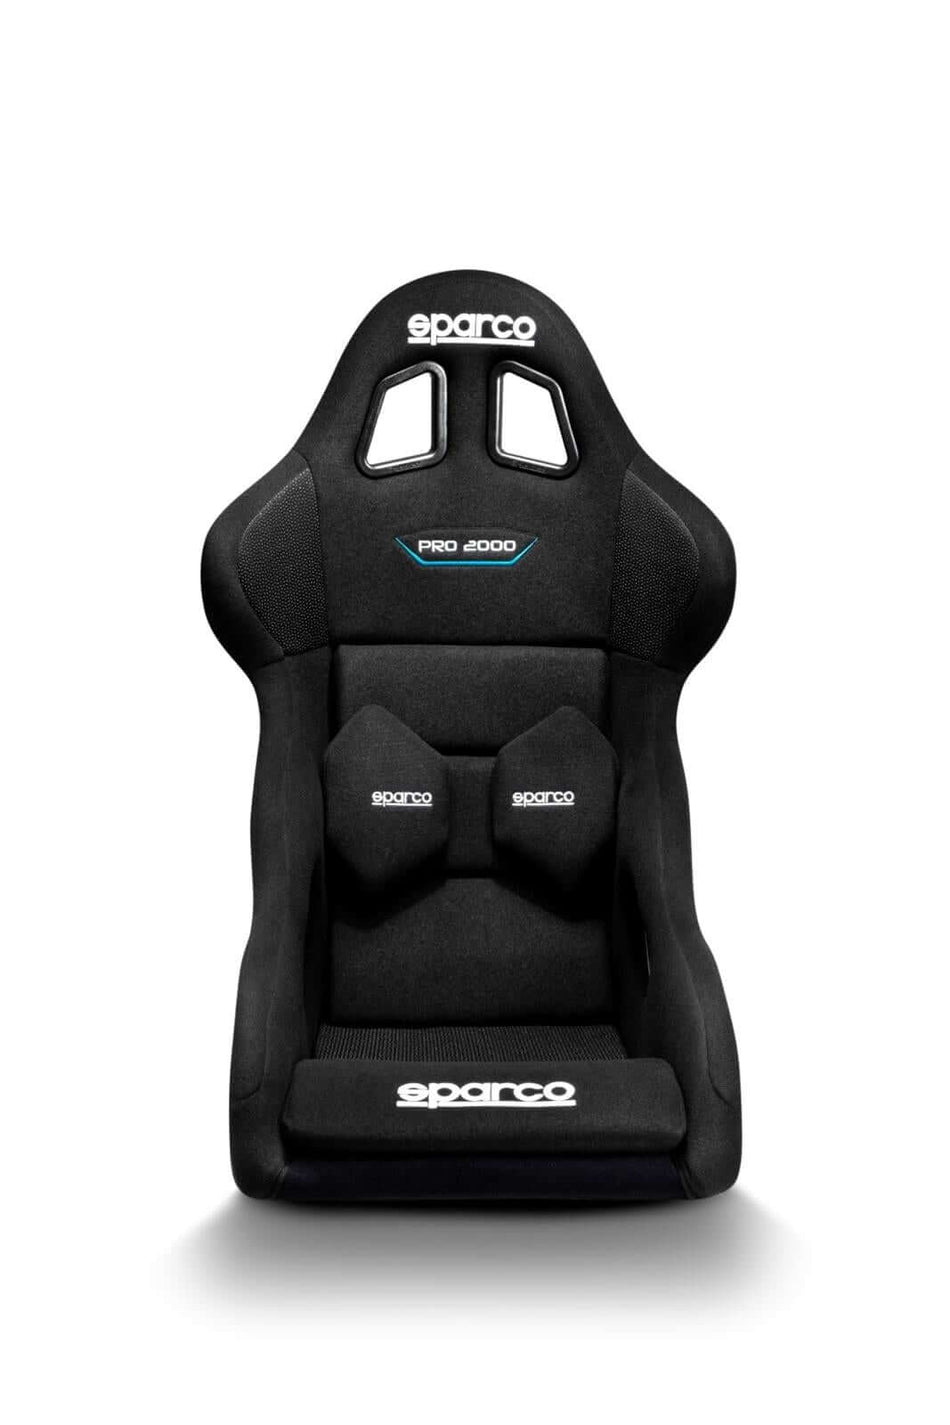 Pro 2000 Racing Seat - $899.00